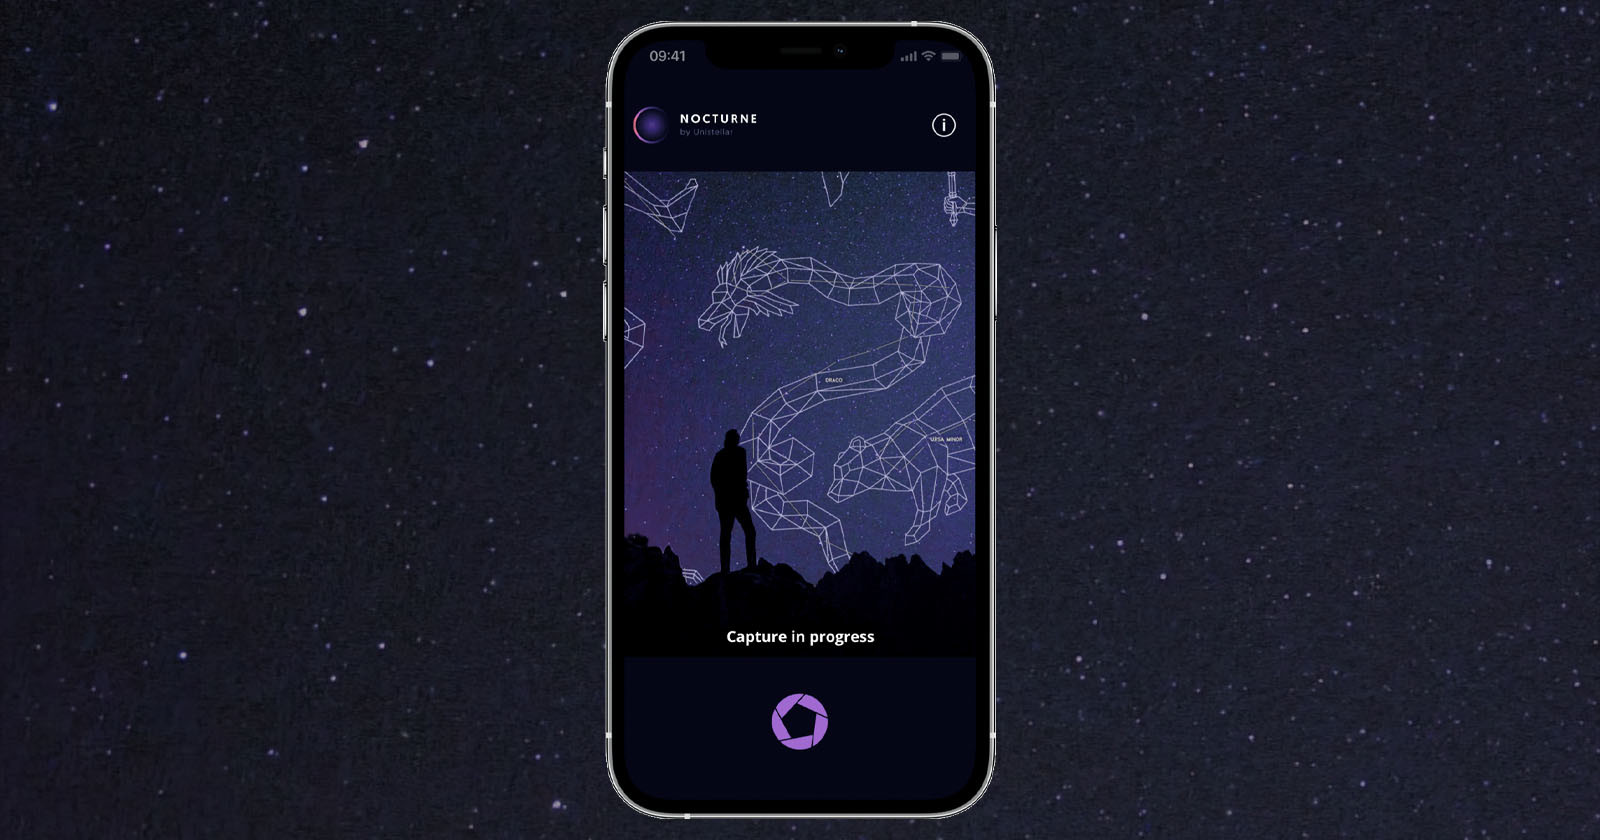  nocturne app uses iphone camera reveal celestial 